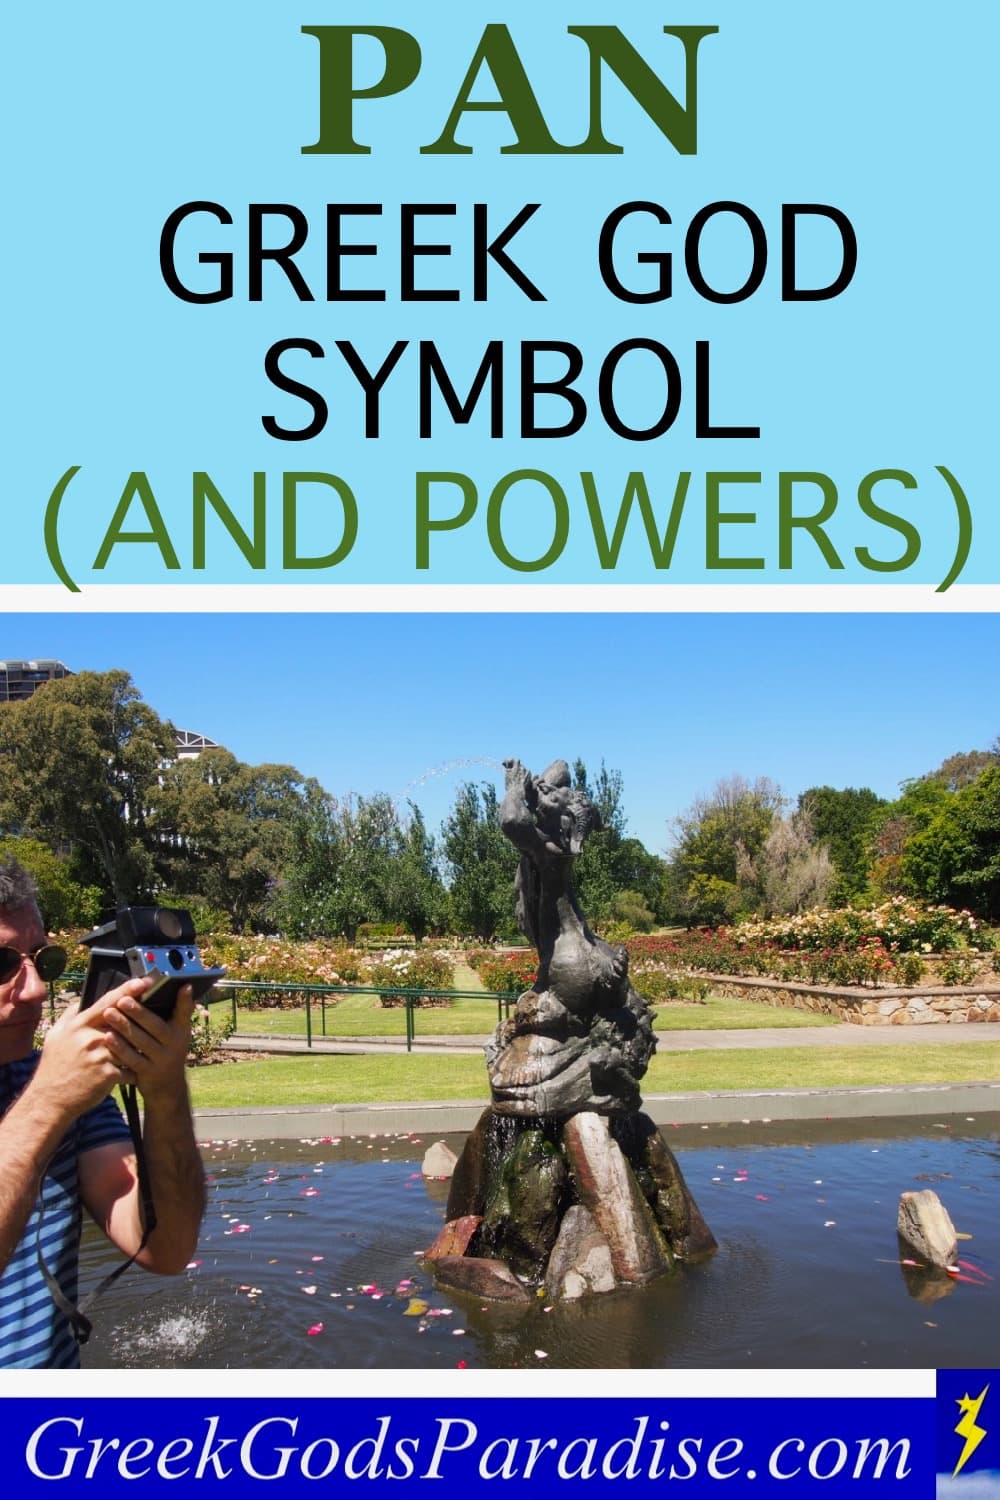 Pan Greek God Symbol and Powers